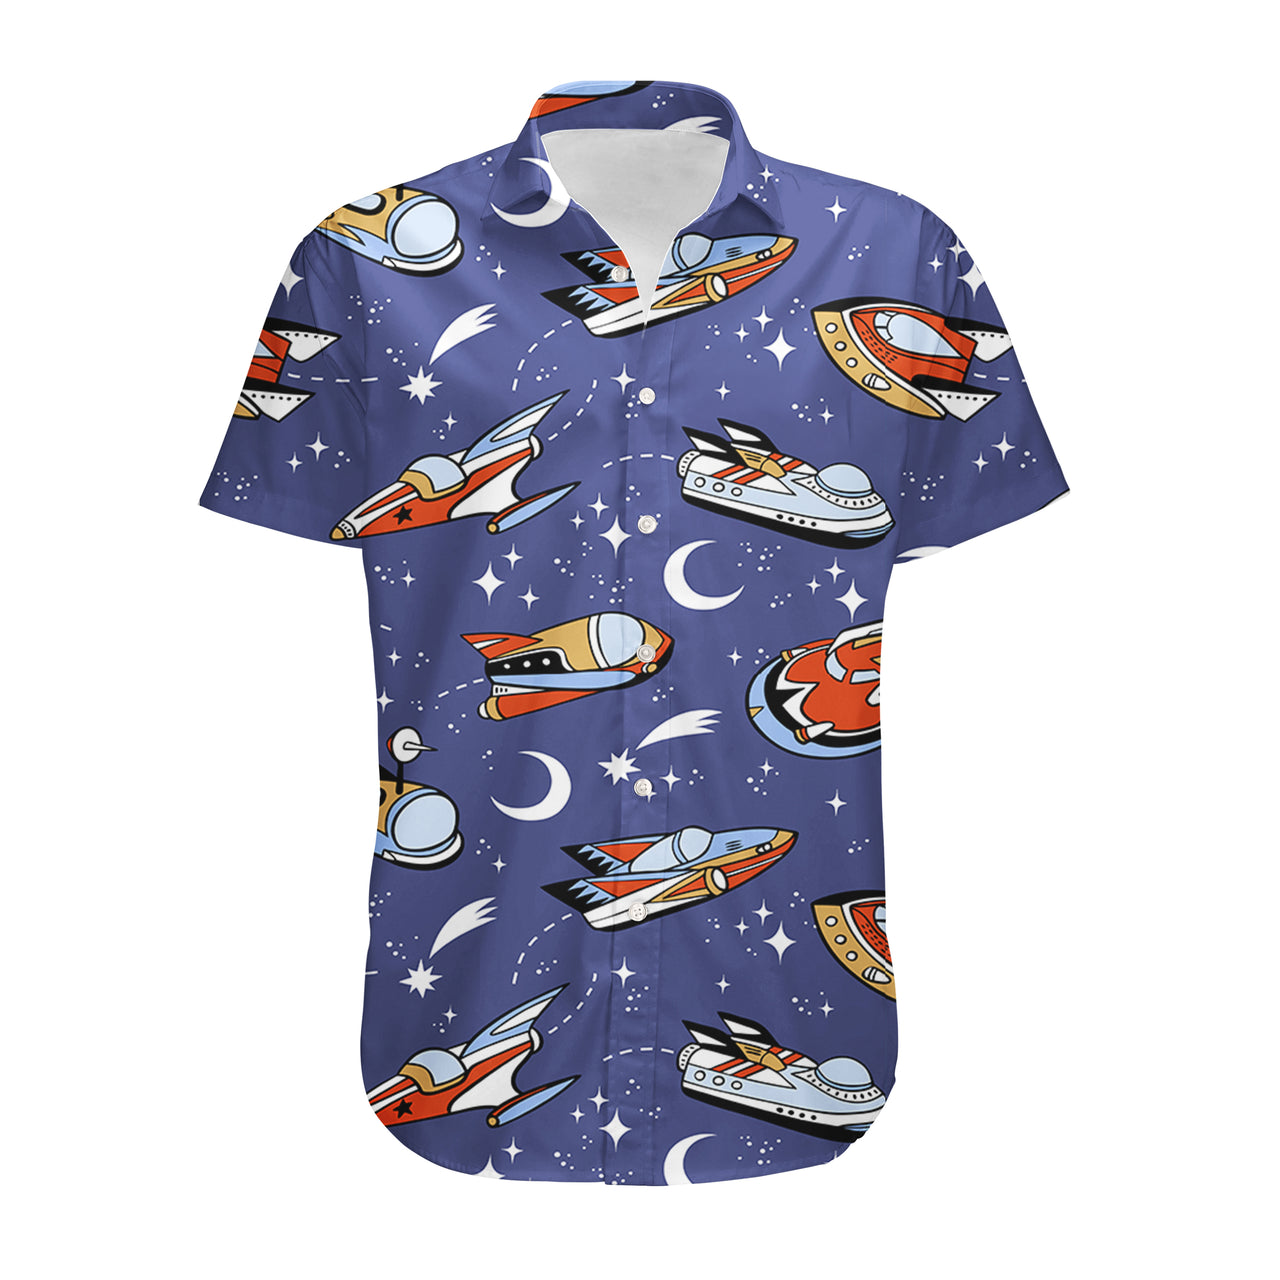 Spaceship & Stars Designed 3D Shirts